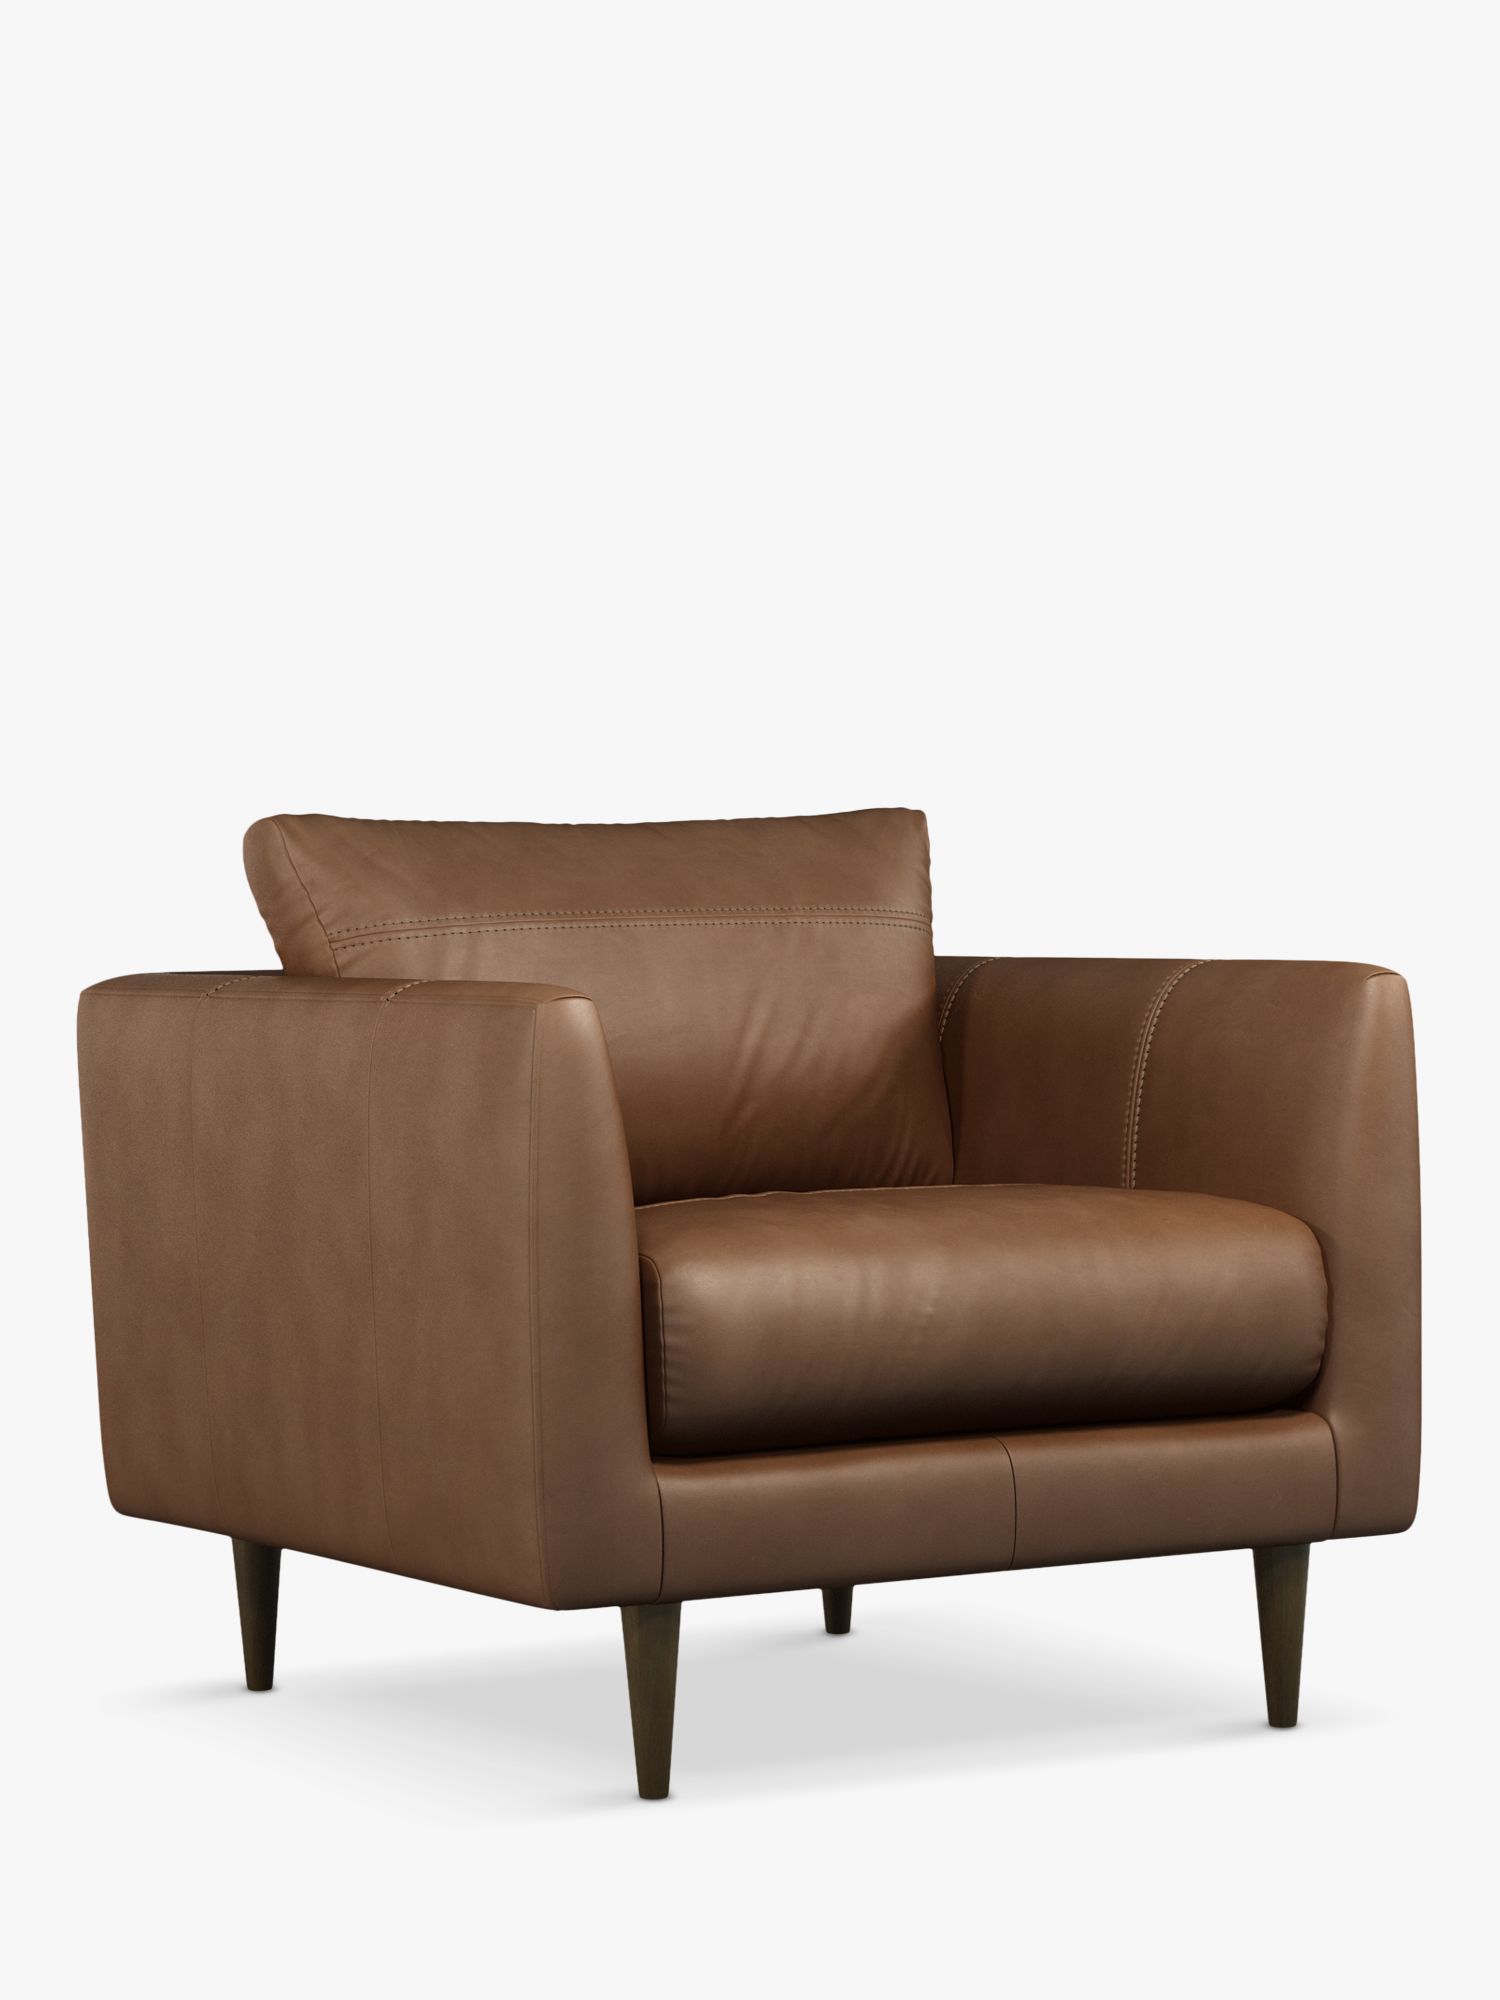 John Lewis + Swoon Latimer Leather Armchair